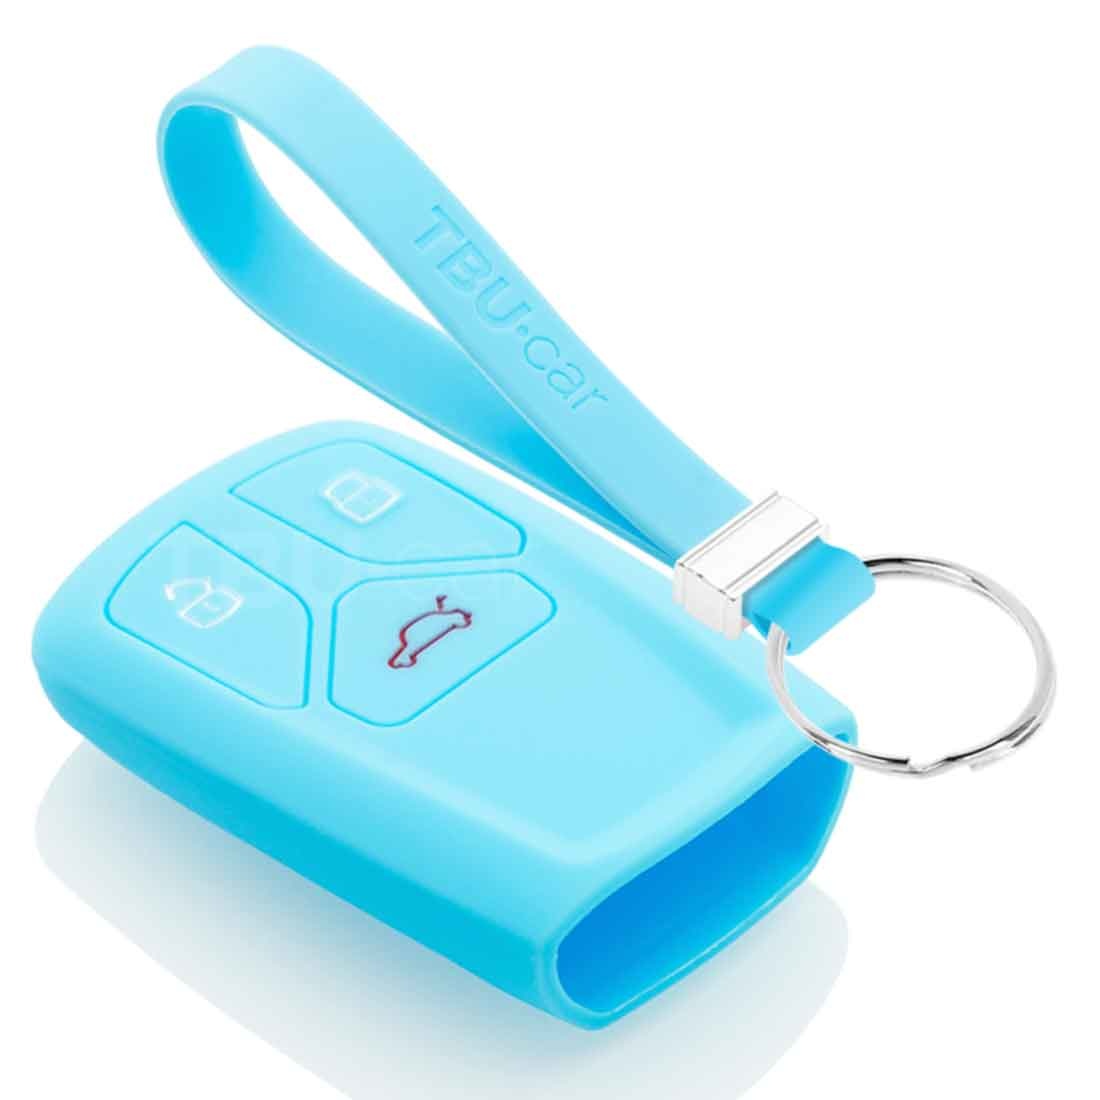 TBU car TBU car Sleutel cover compatibel met Audi - Silicone sleutelhoesje - beschermhoesje autosleutel - Lichtblauw